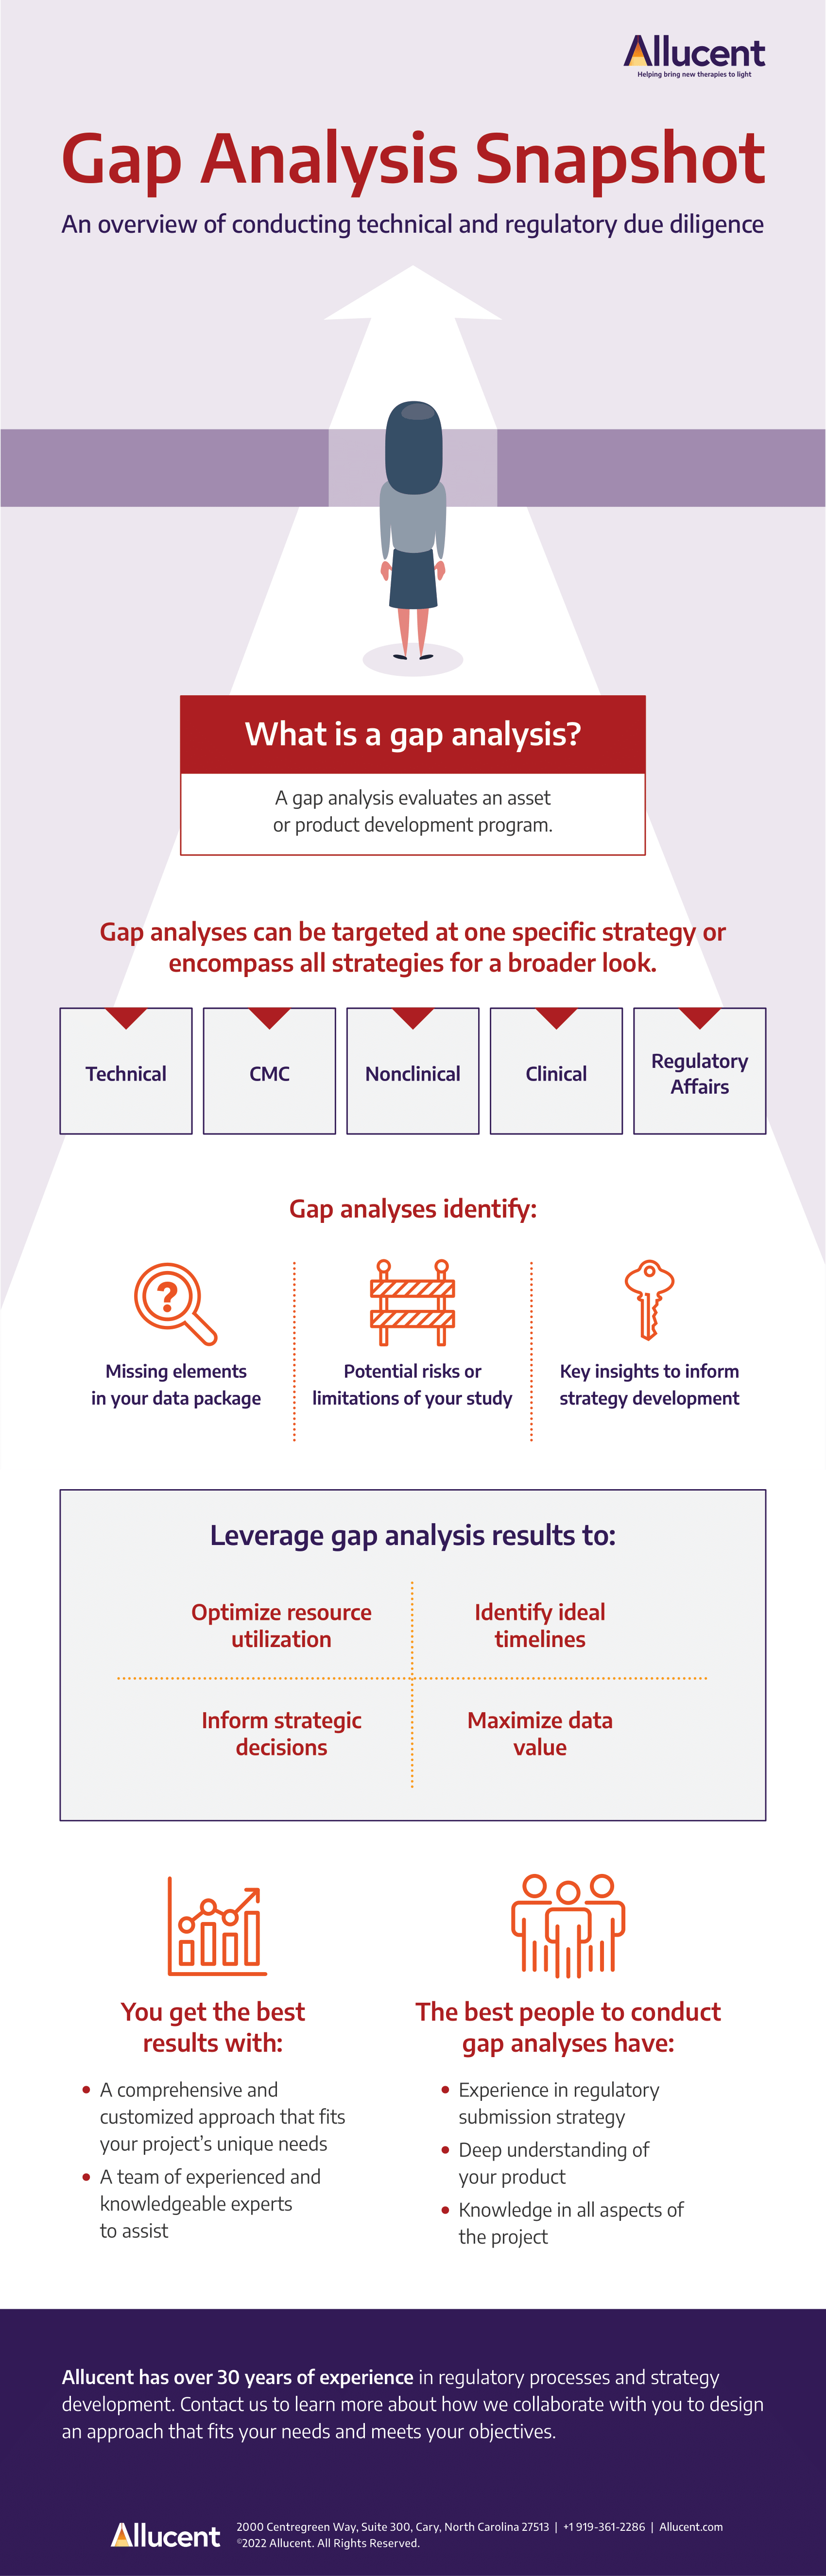 Gap Analysis Infographic 12-2022 Final-1.png